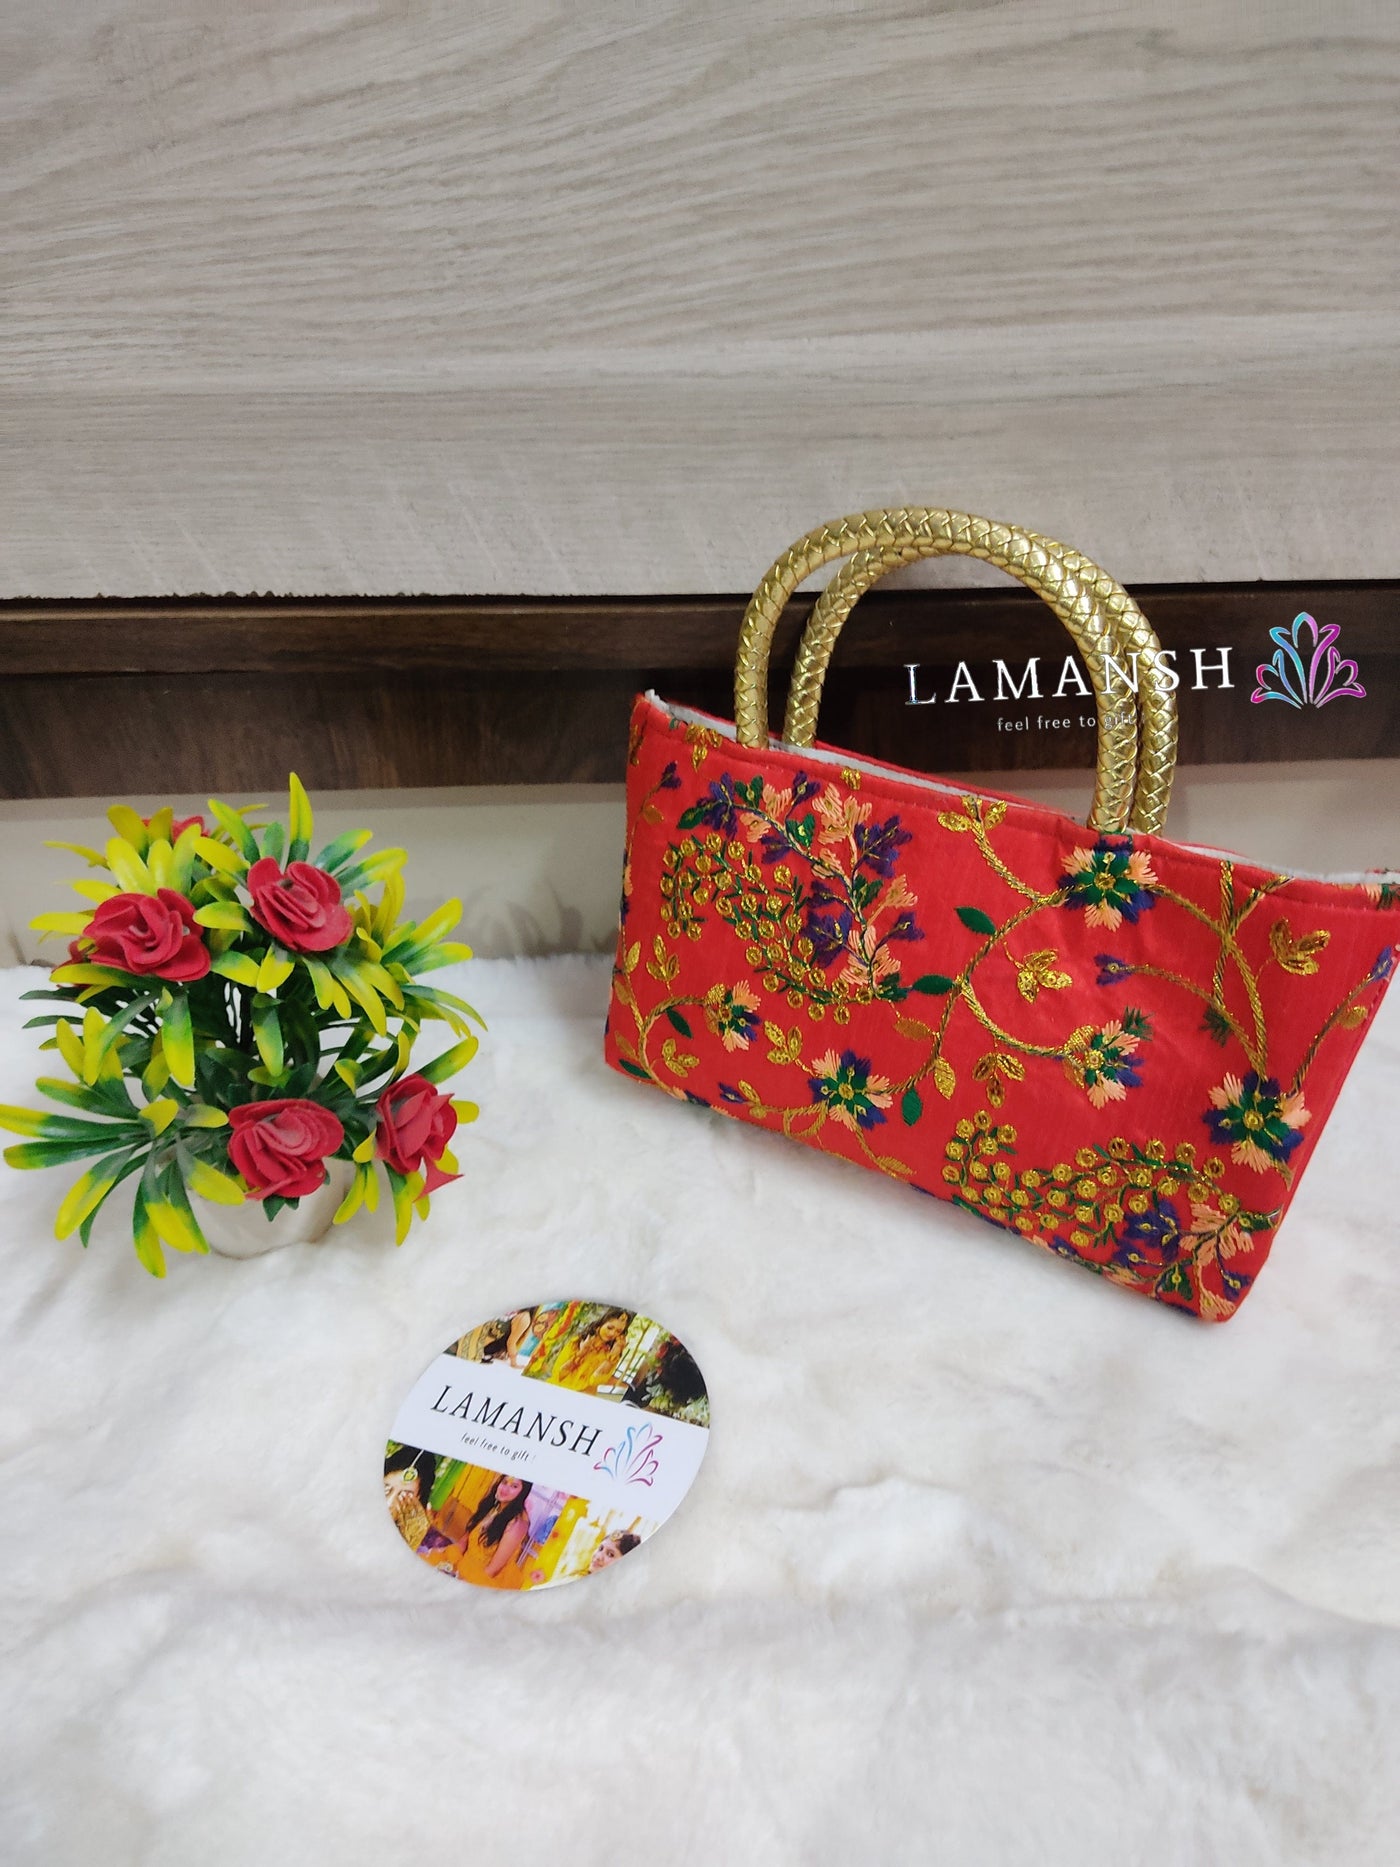 LAMANSH ® hand bags (Bulk Pack) LAMANSH® Embroidered Hand Bag for Bridesmaids / Return Gifts 🎁 & Favors for Wedding & Pooja